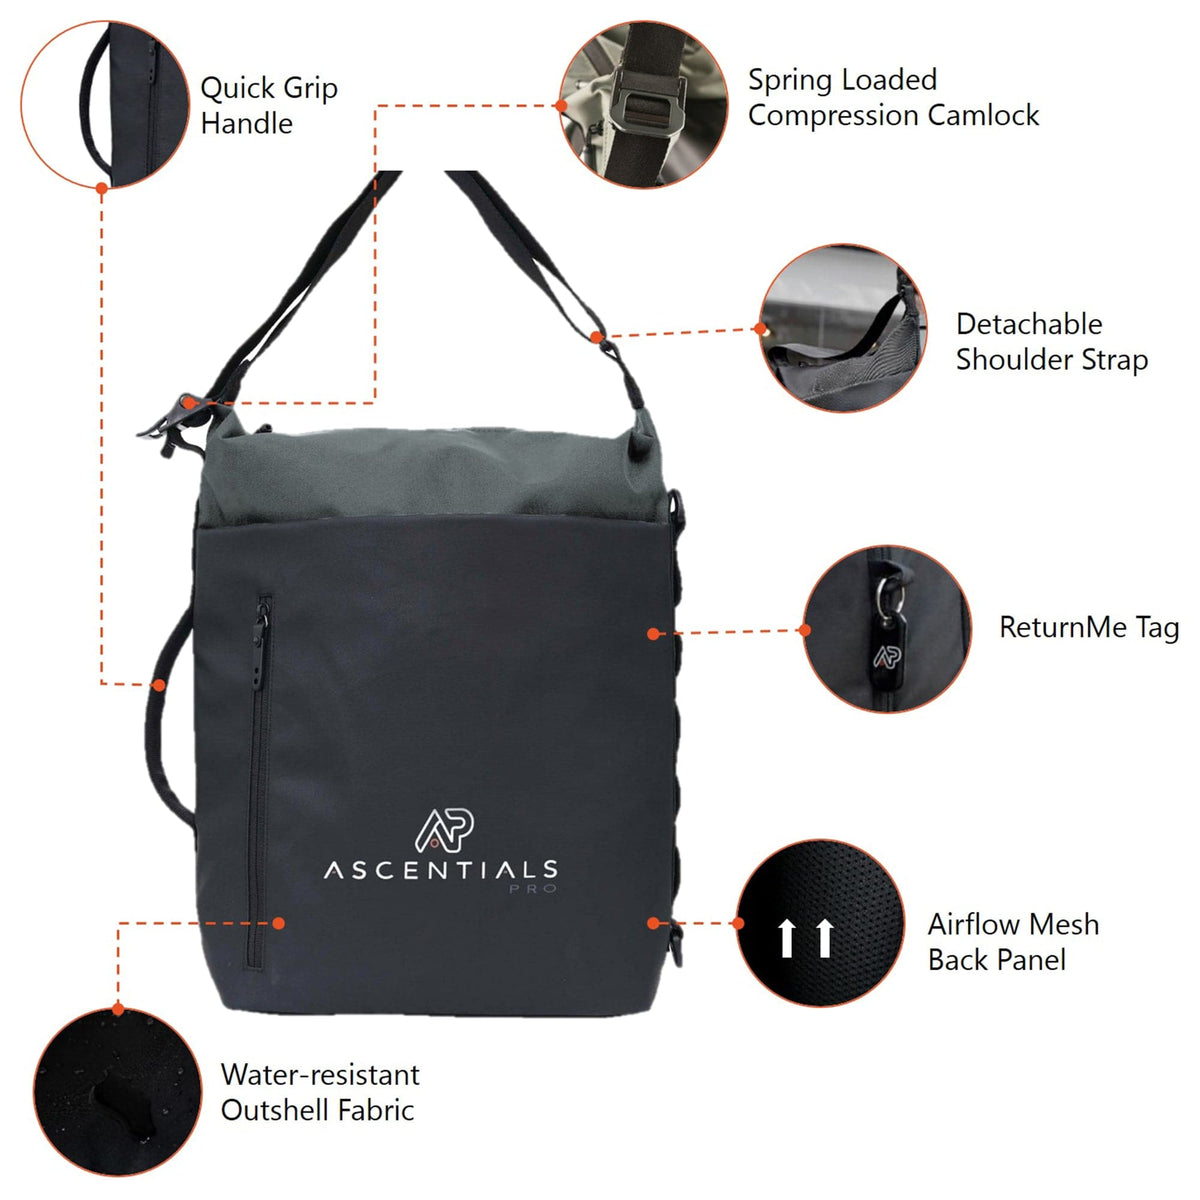 Ascentials Pro Blaze Backpack